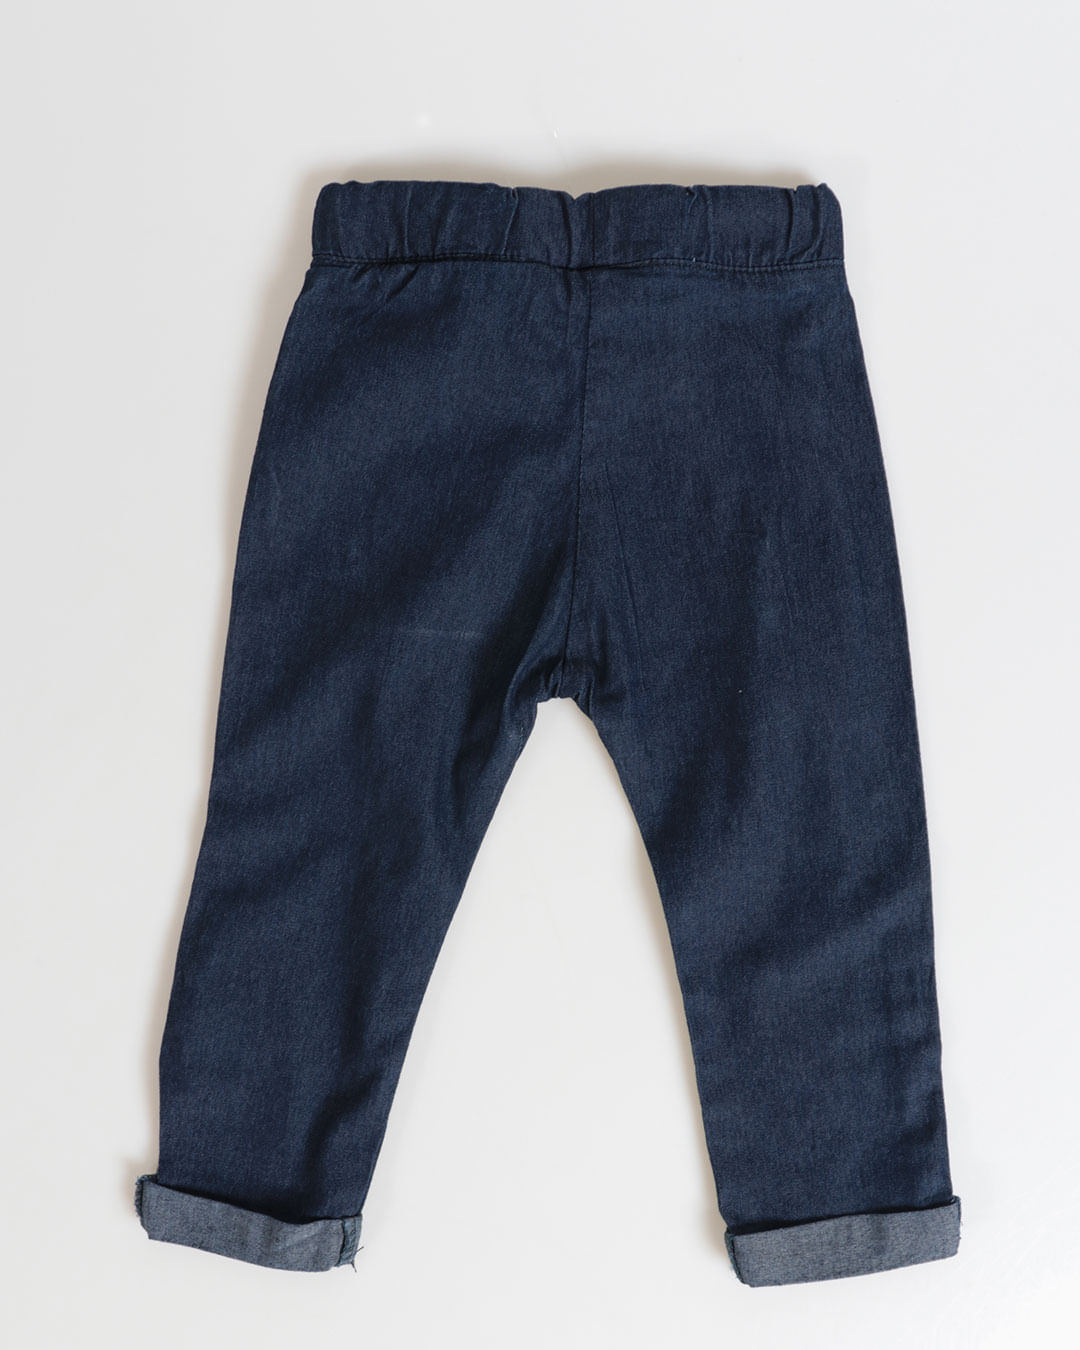 39621000054045-blue-jeans-medio-2